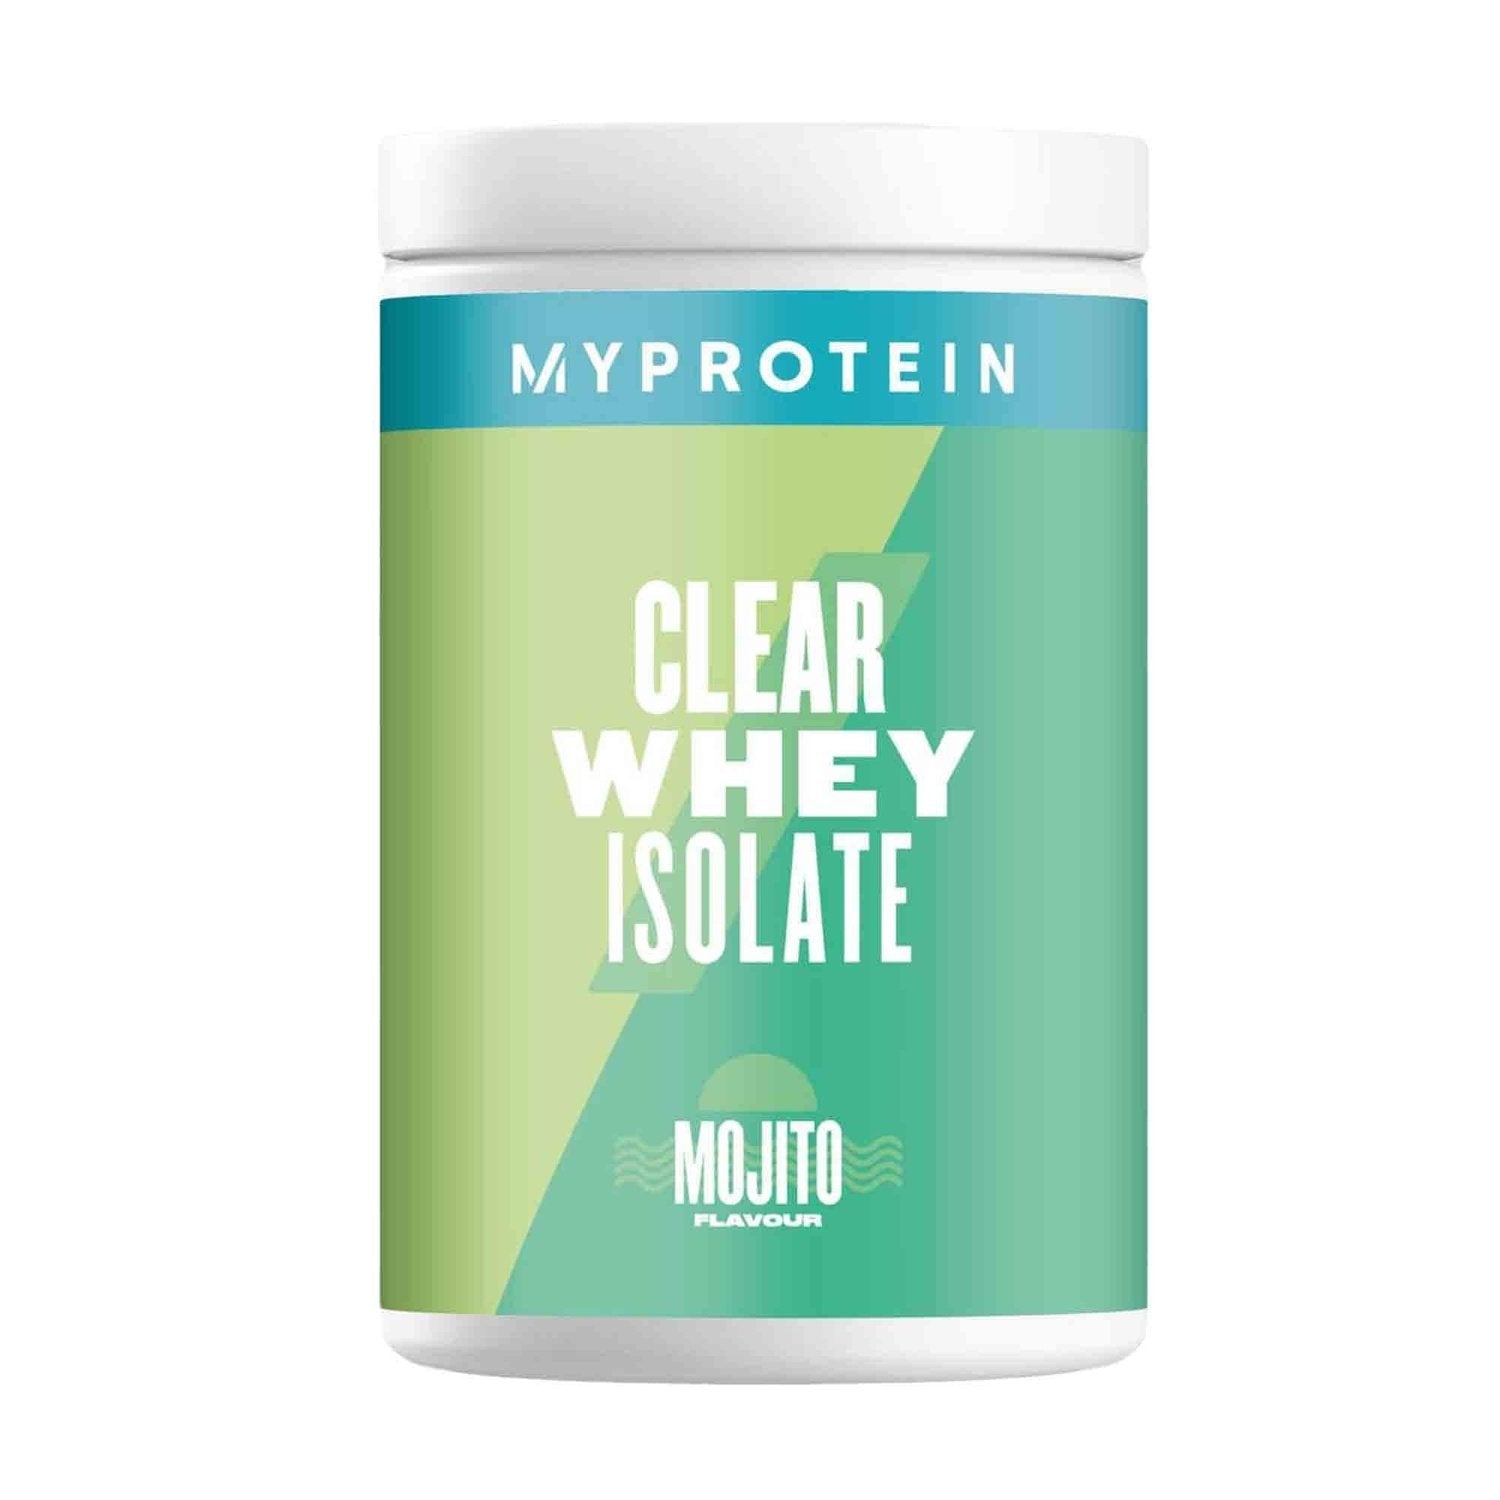 MyProtein Clear Whey Isolate 500 g Mojito kaufen bei HighPowered.ch